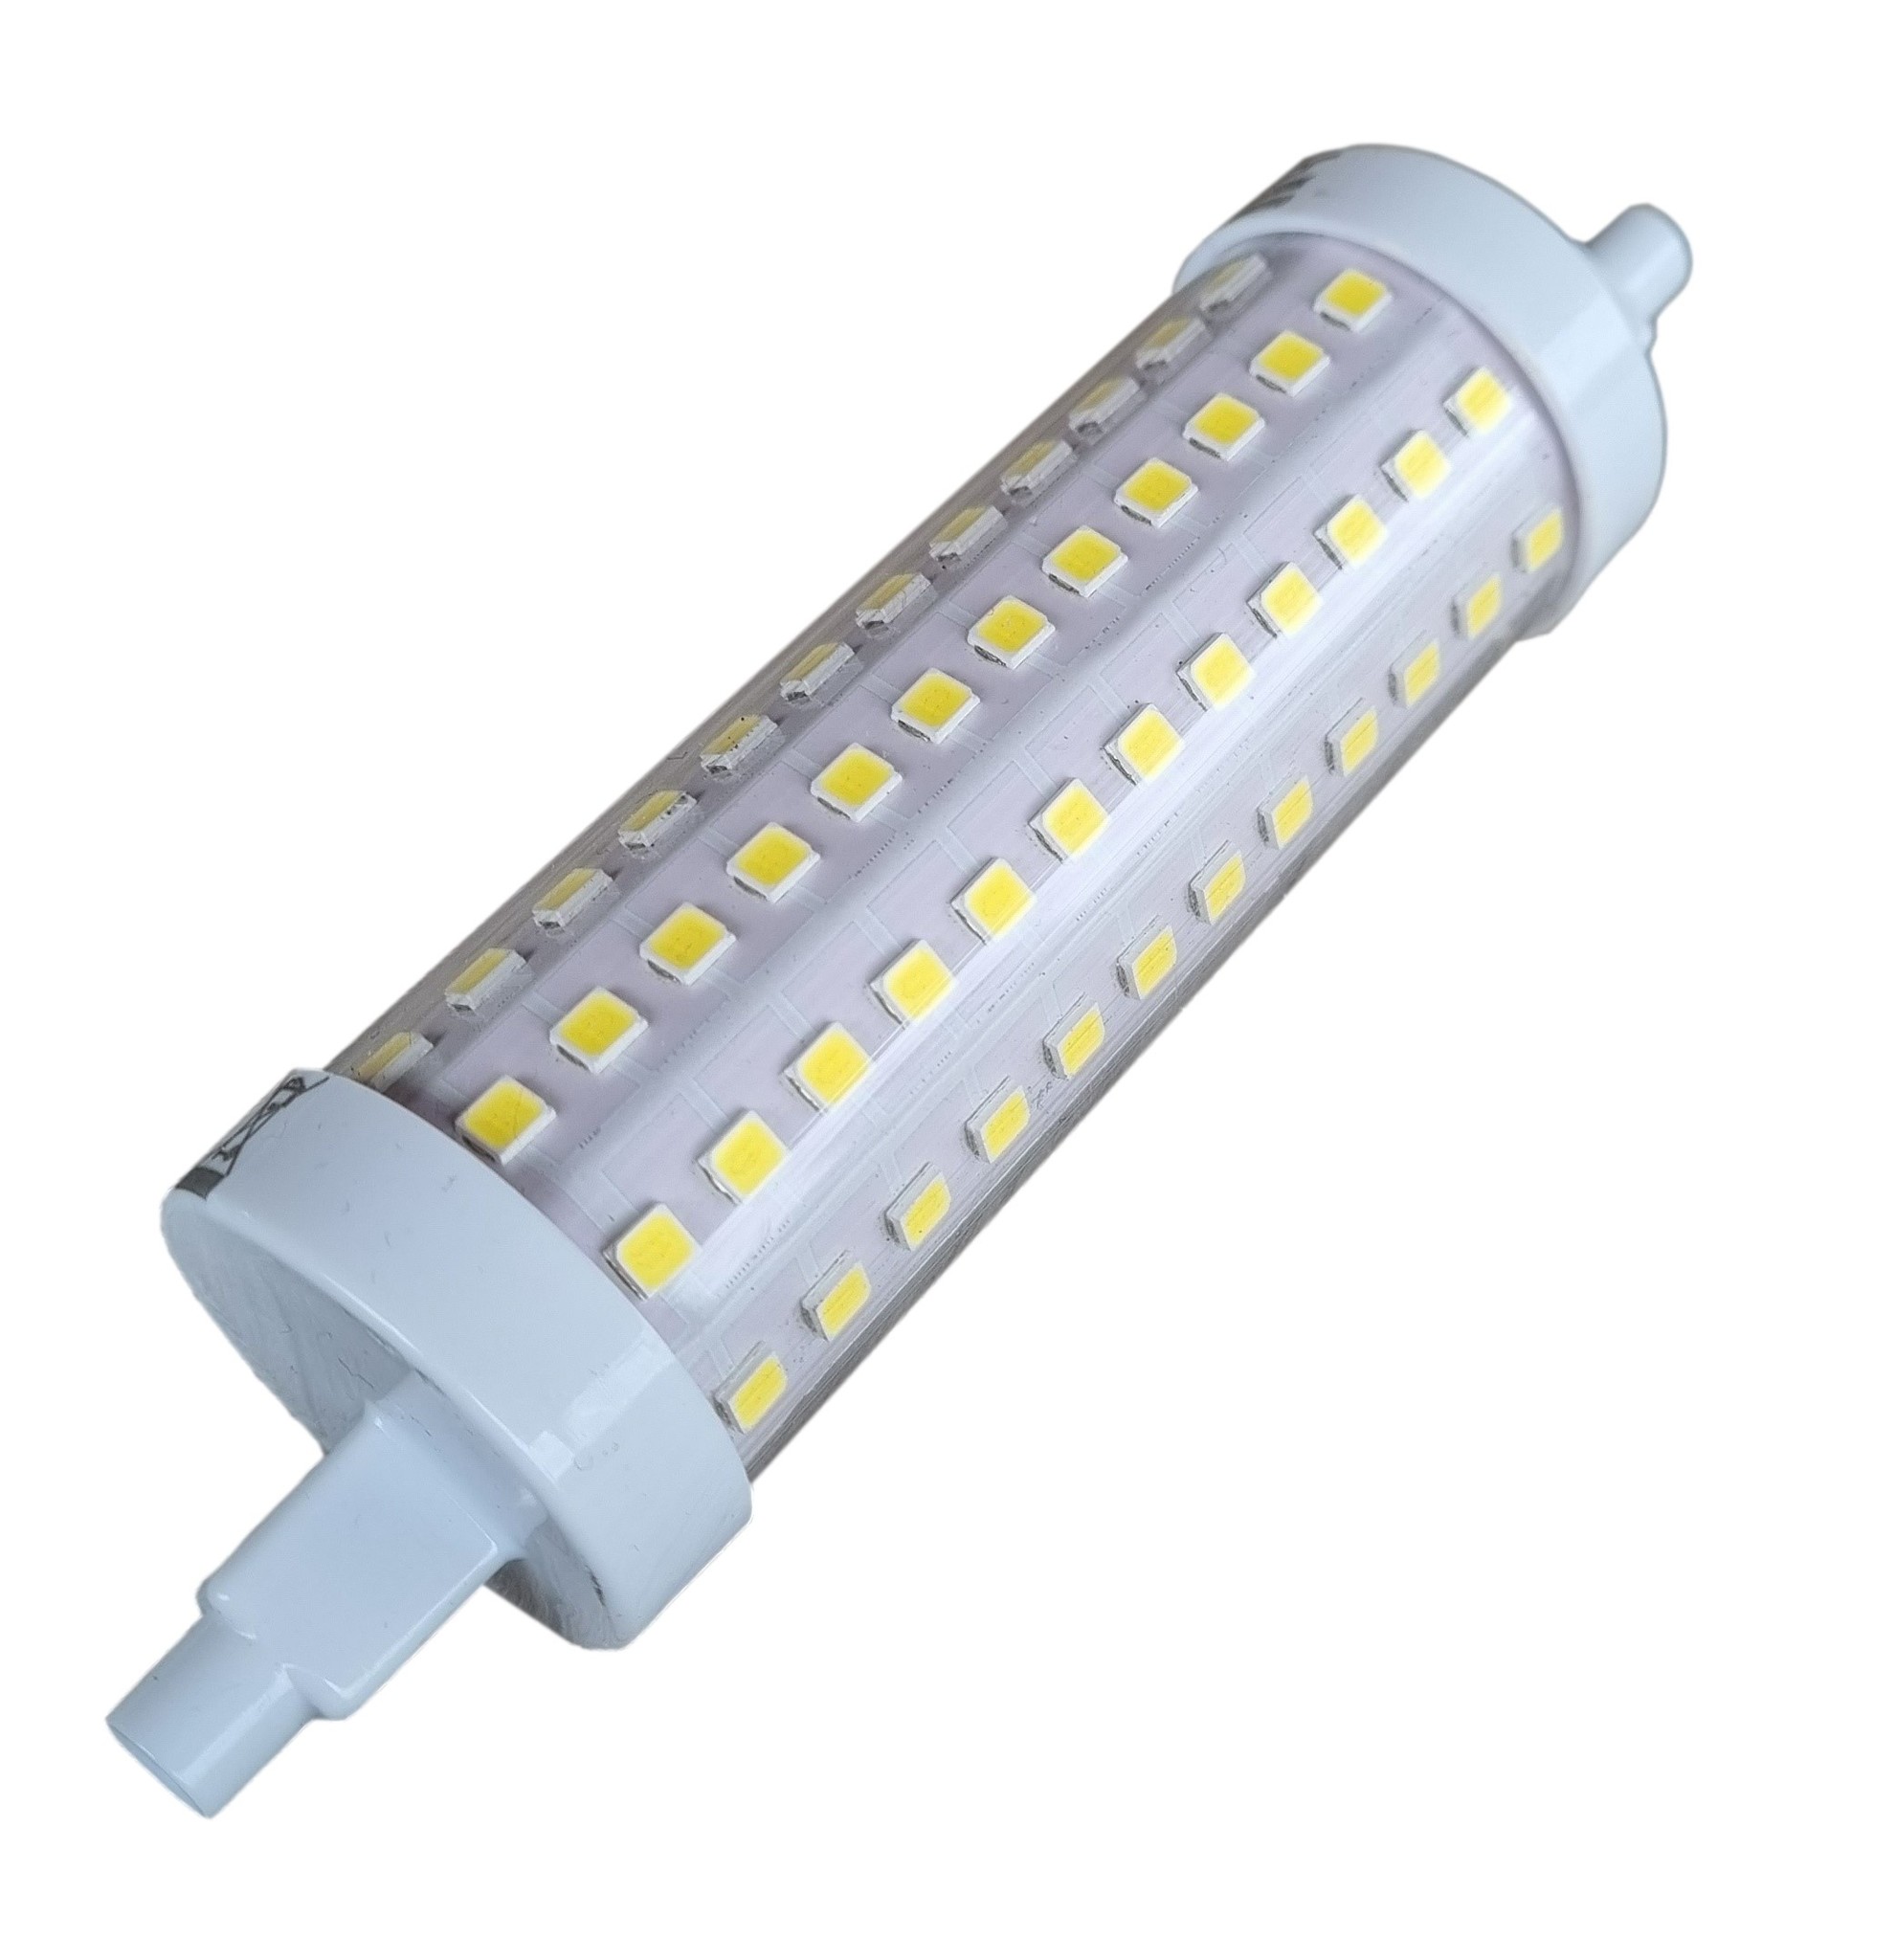 R7s staaflamp | 118x29mm | LED 16W=131W halogeen - 2100 daglichtwit 6500K